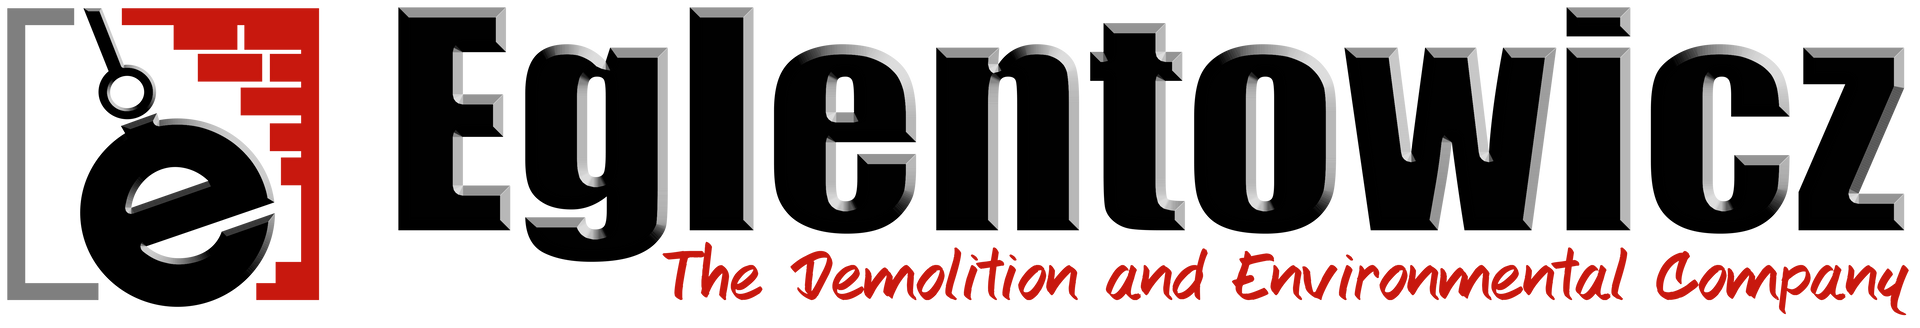 Eglentowicz Demolition & Environmental Company Logo